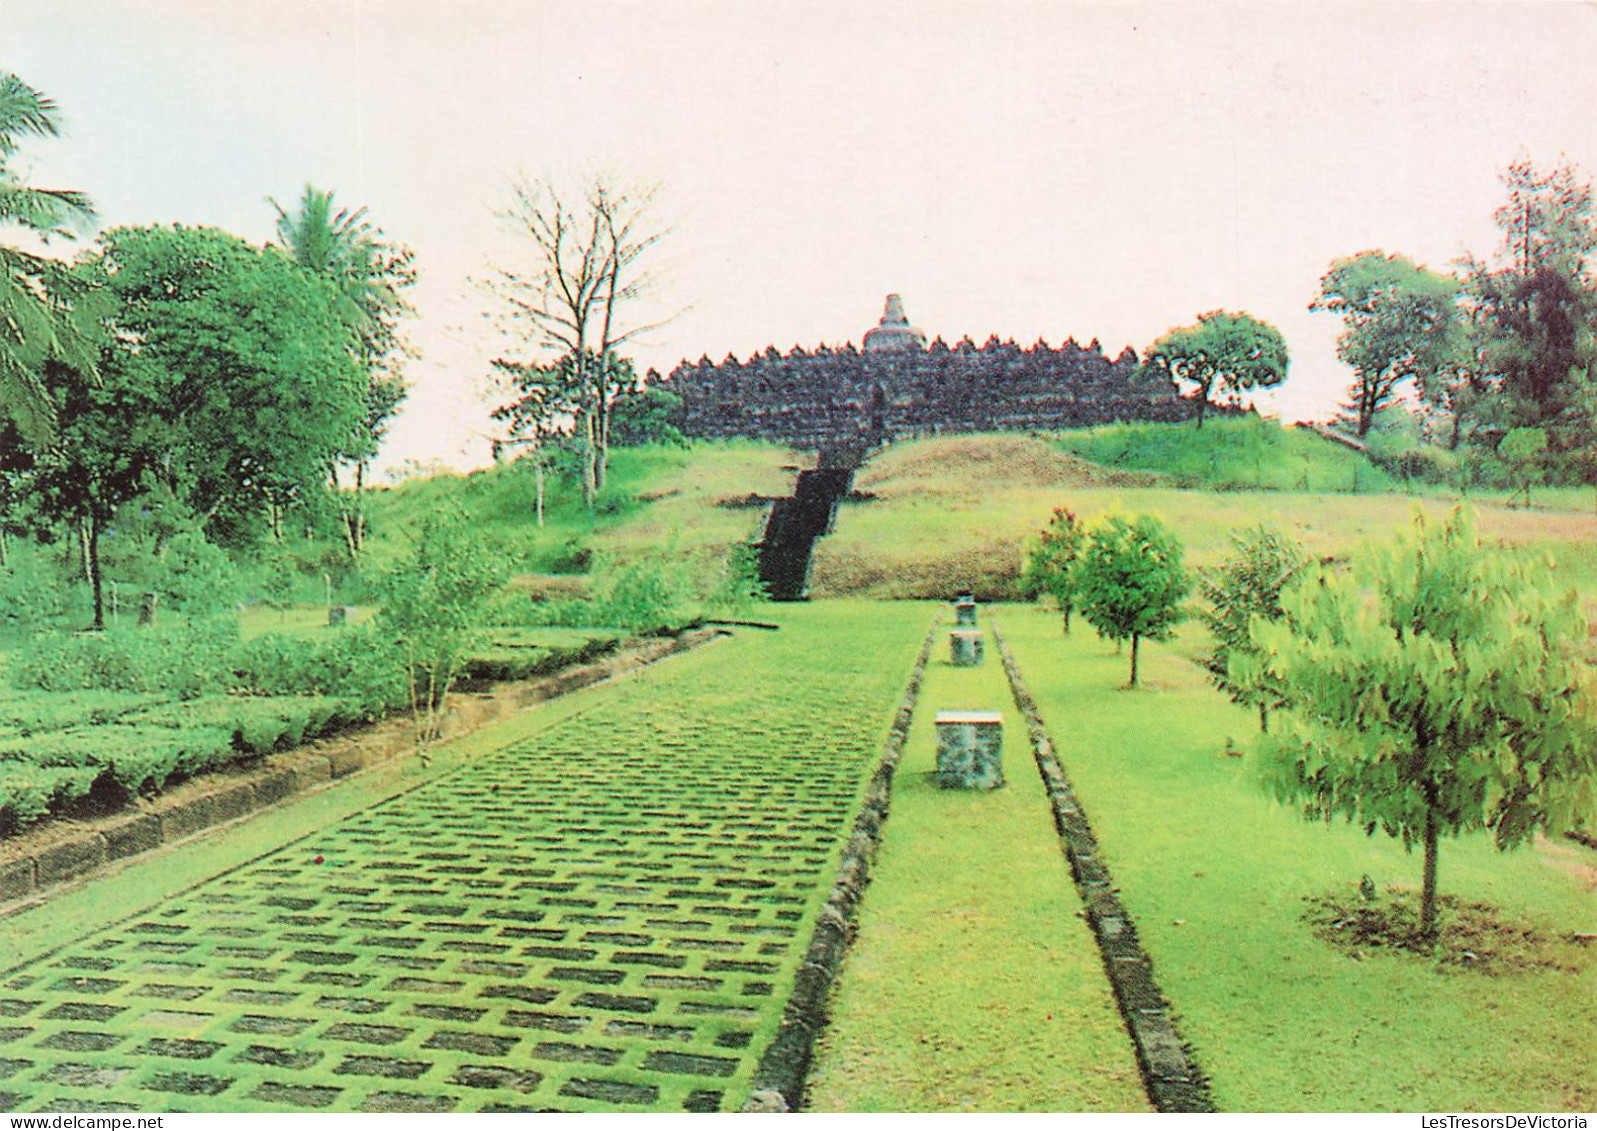 INDONESIE - Borobudur Temple - 8th Ad Buddhist - Monument - Central Java - Indonesia - Carte Postale - Indonesia